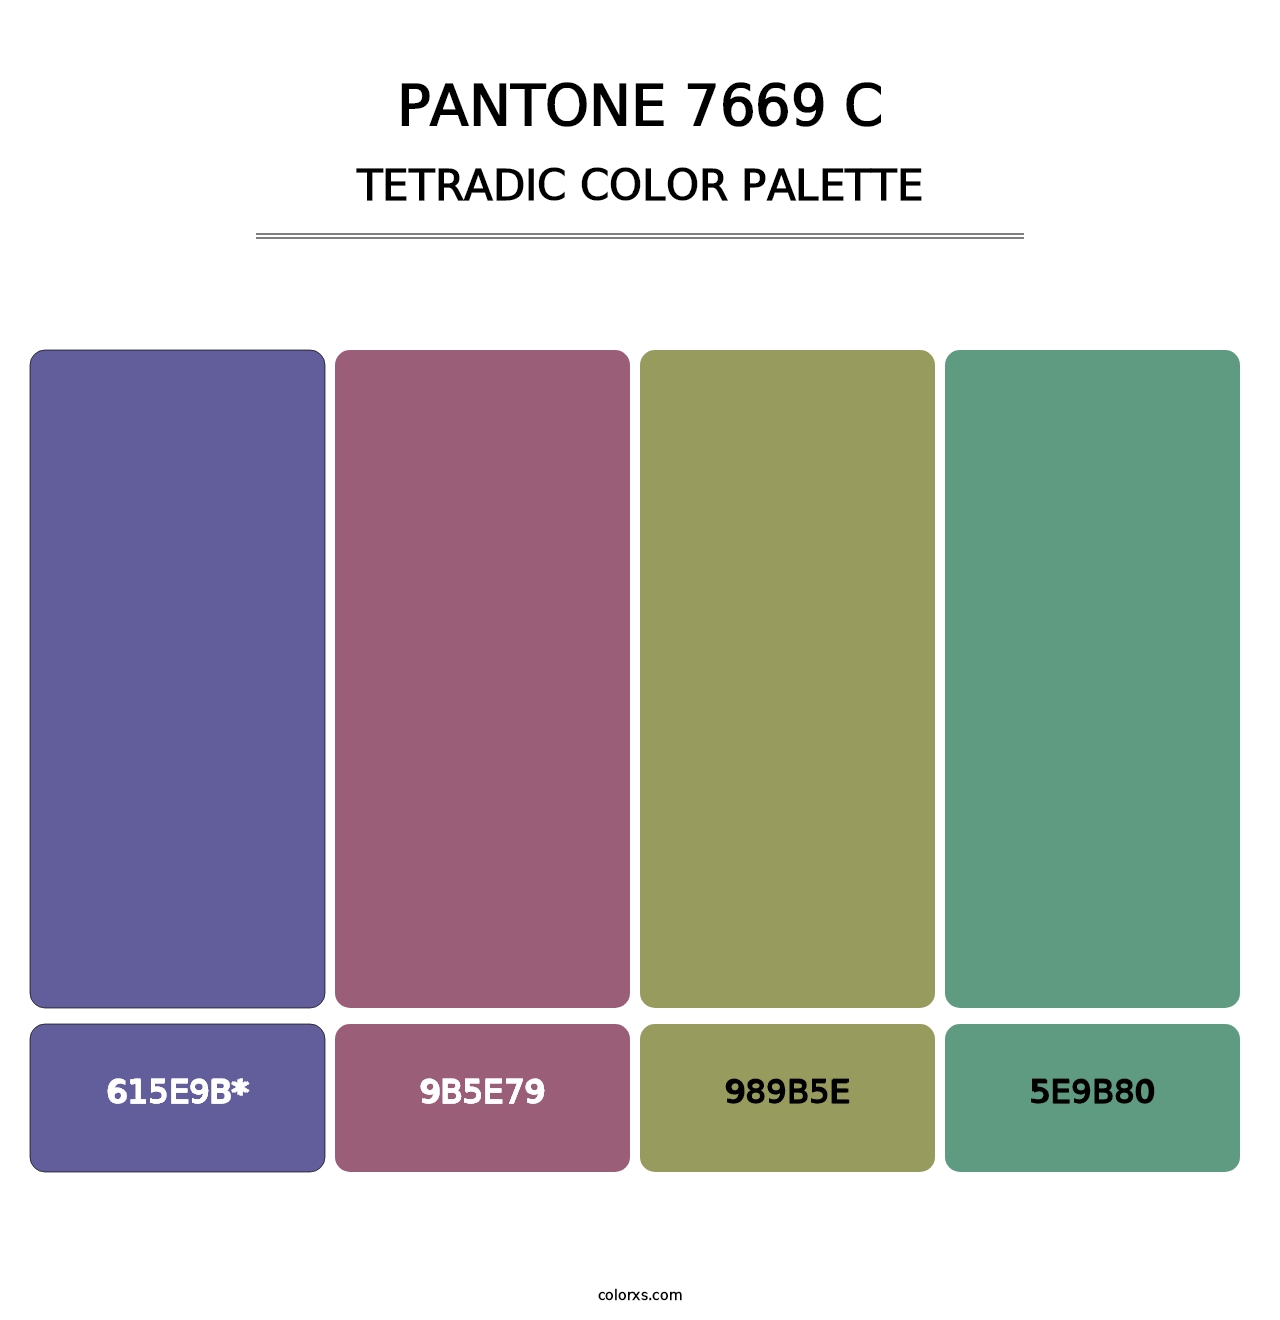 PANTONE 7669 C - Tetradic Color Palette